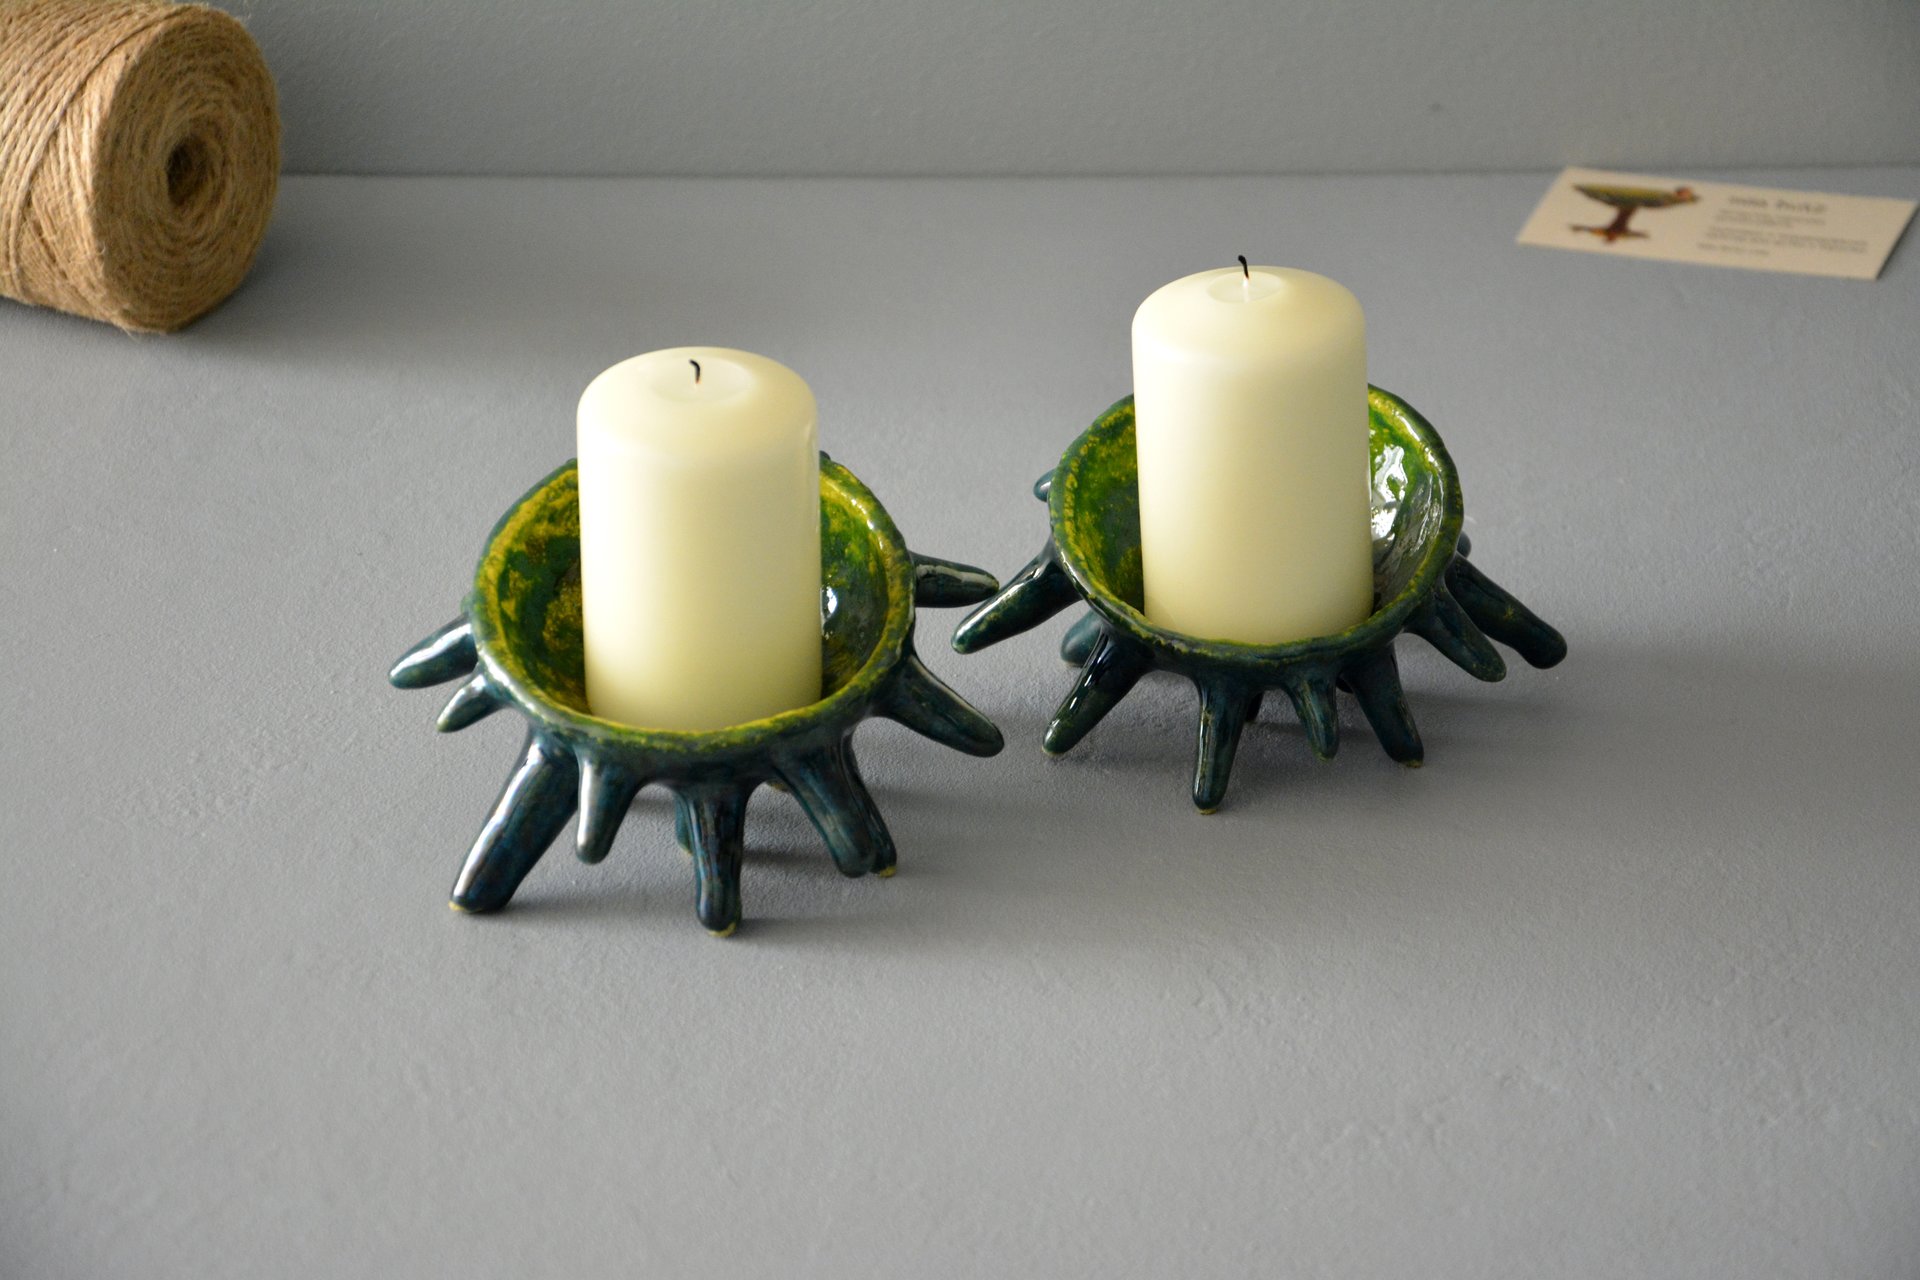 Spikes - Ceramic Candl-holders, diameter - 10 cm, photo 4 of 7.